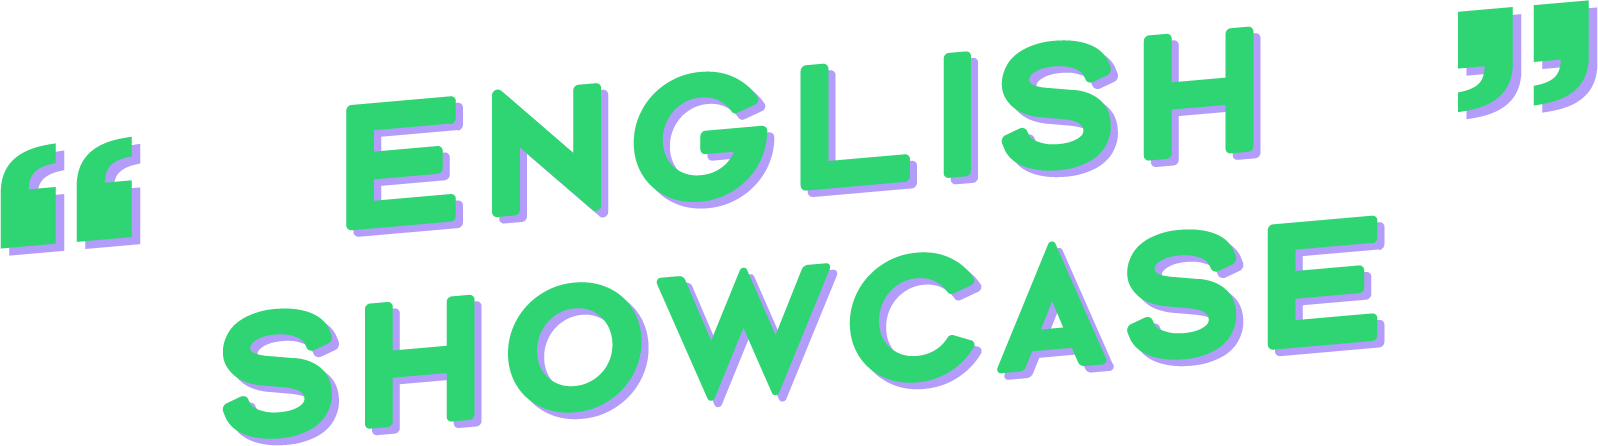 ENGLISH SHOWCASE